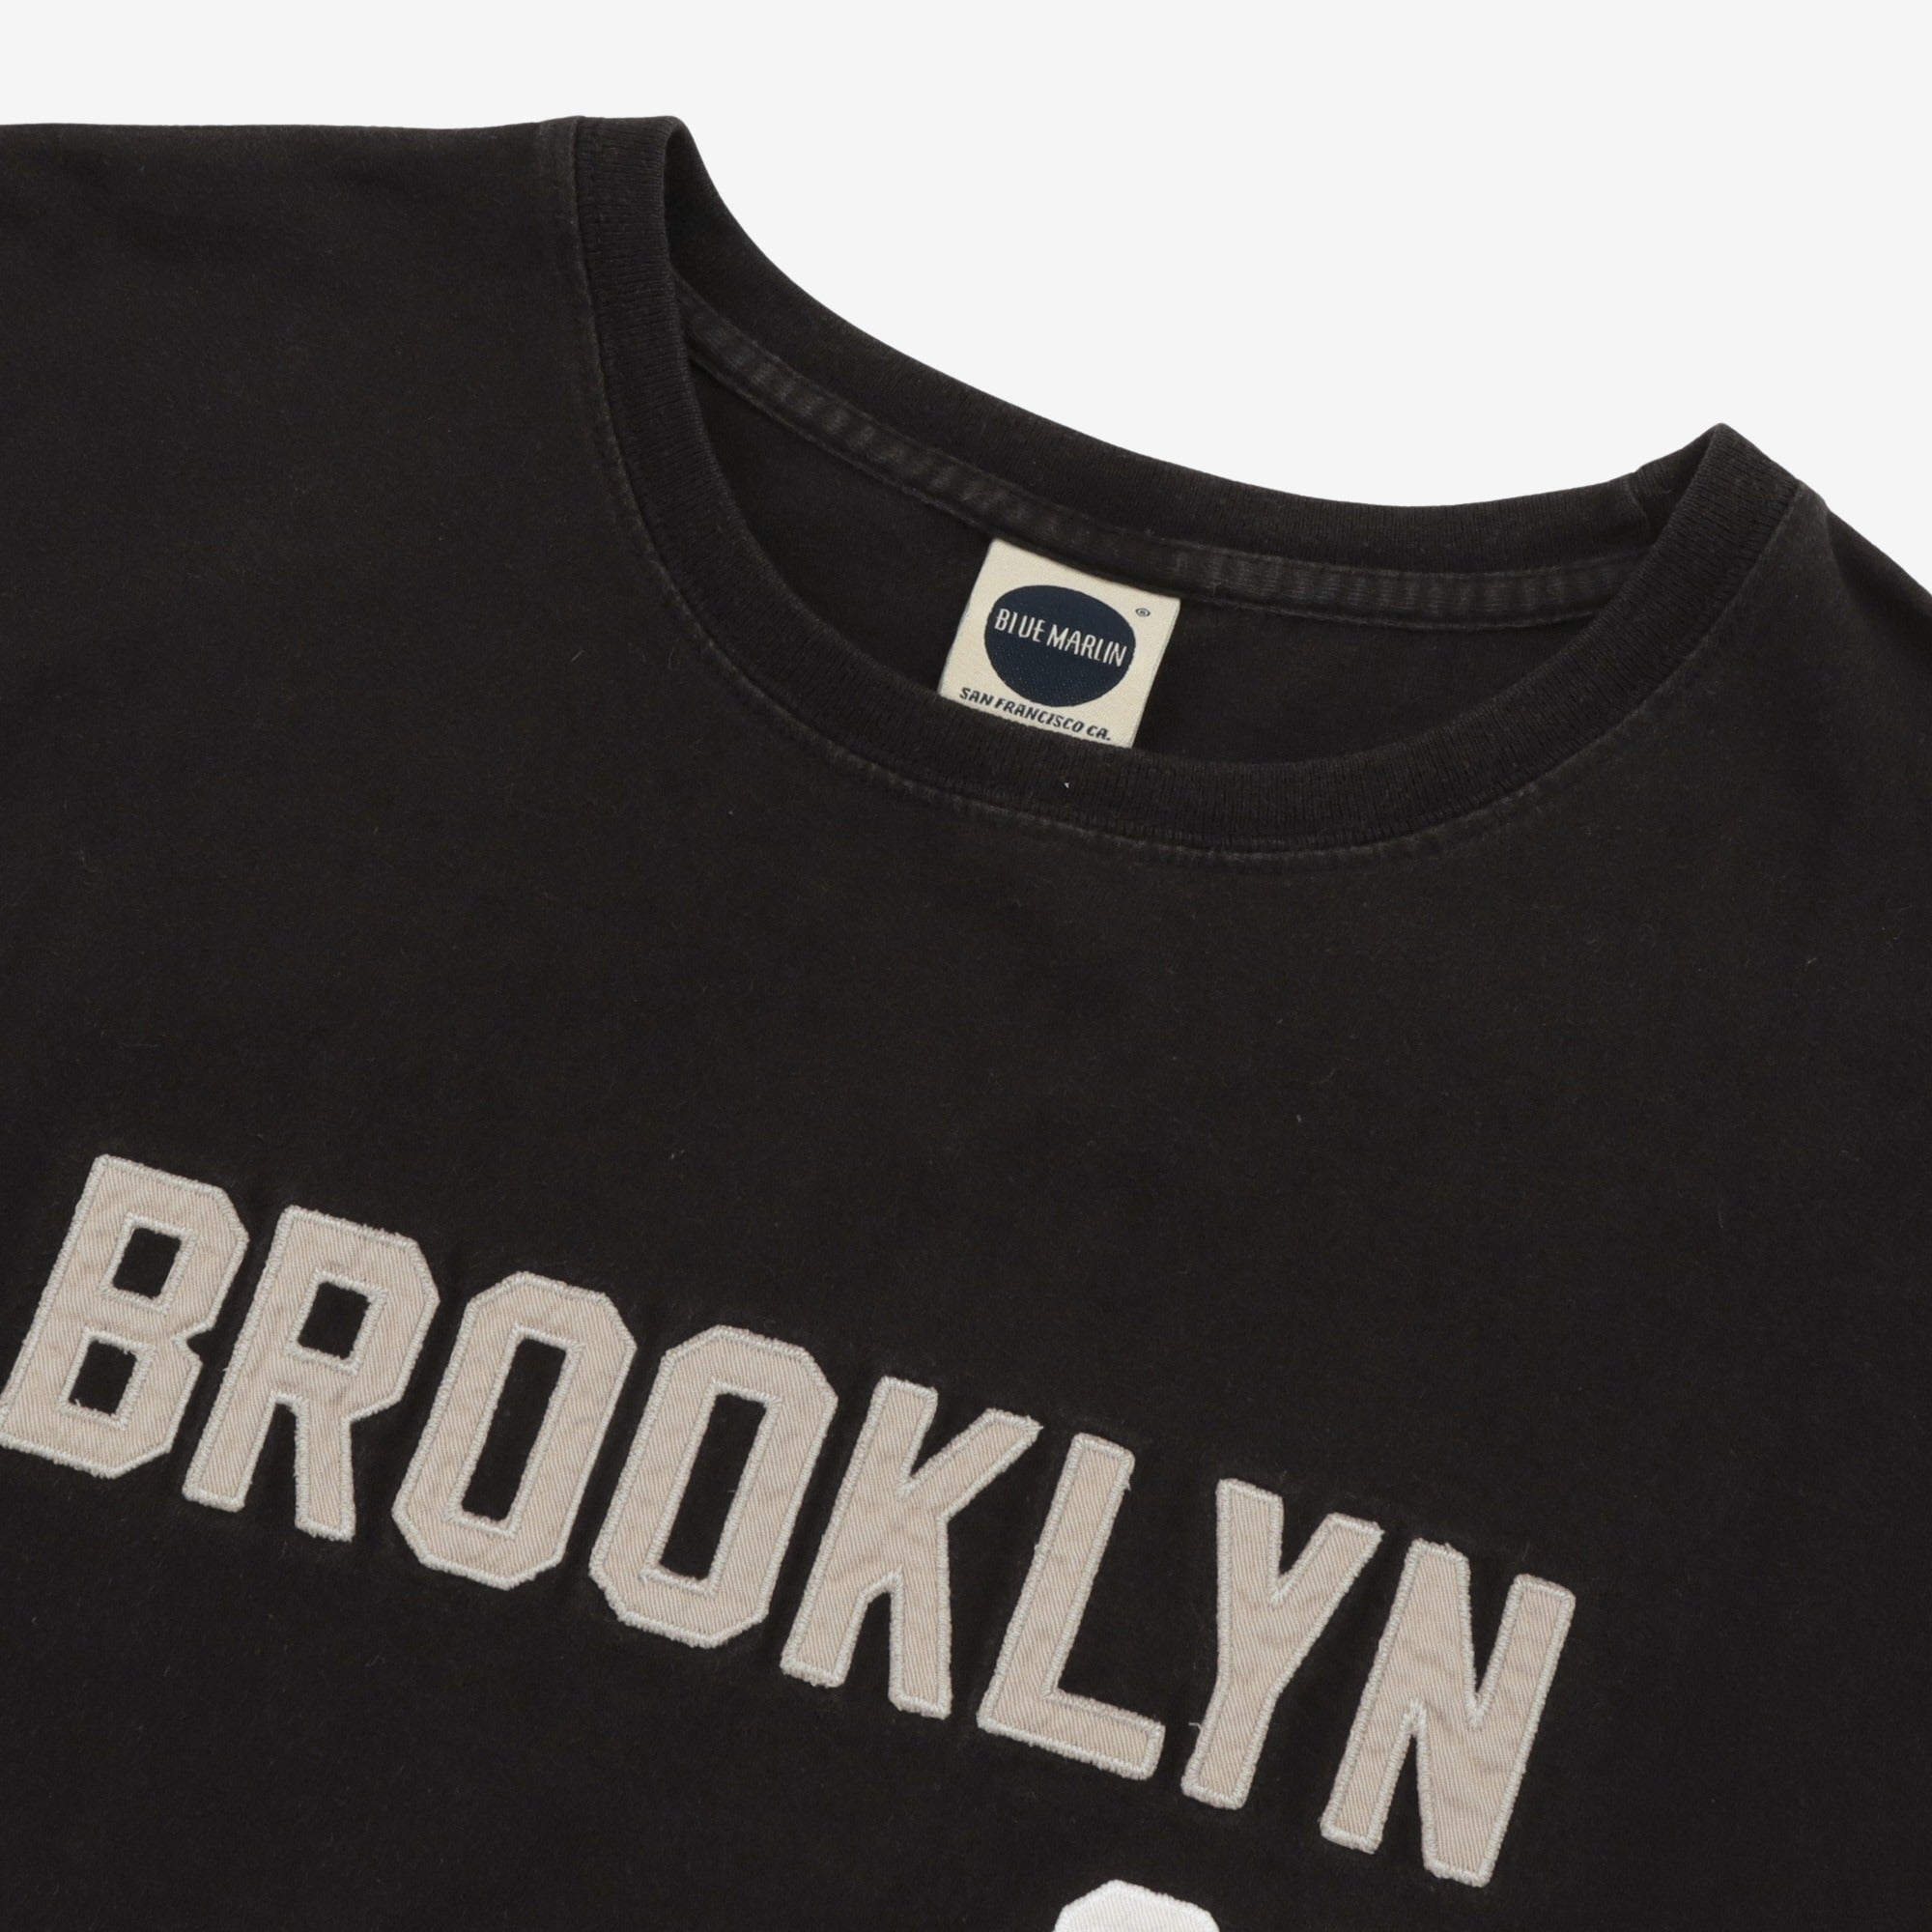 Blue Marlin Brooklyn 23 T-Shirt